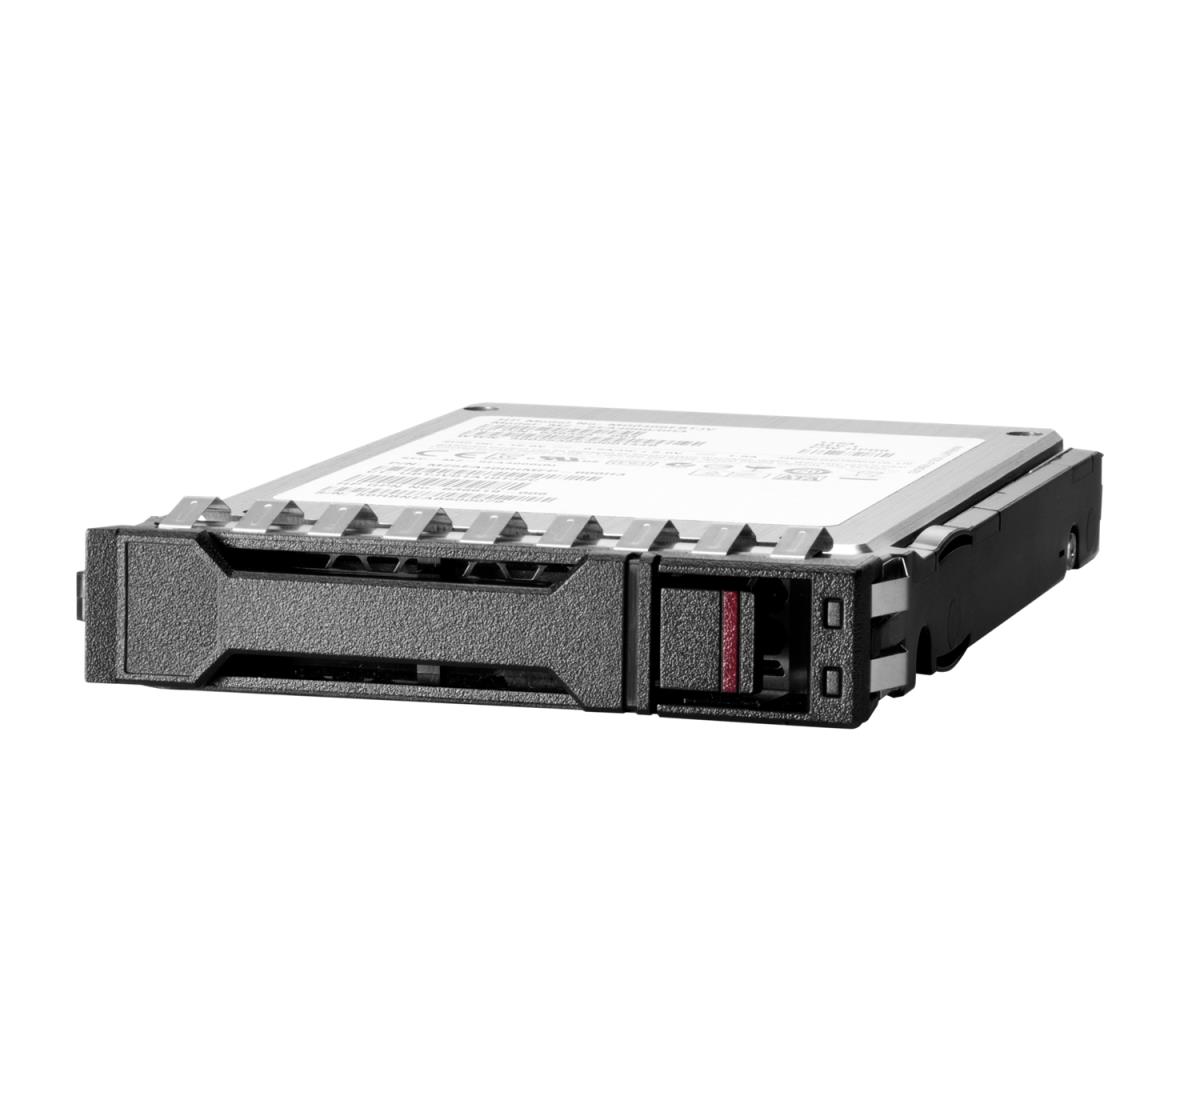 メーカー直送 2.5 SSD Hewlett 12G Packard SAS Enterprise 内蔵型SSD